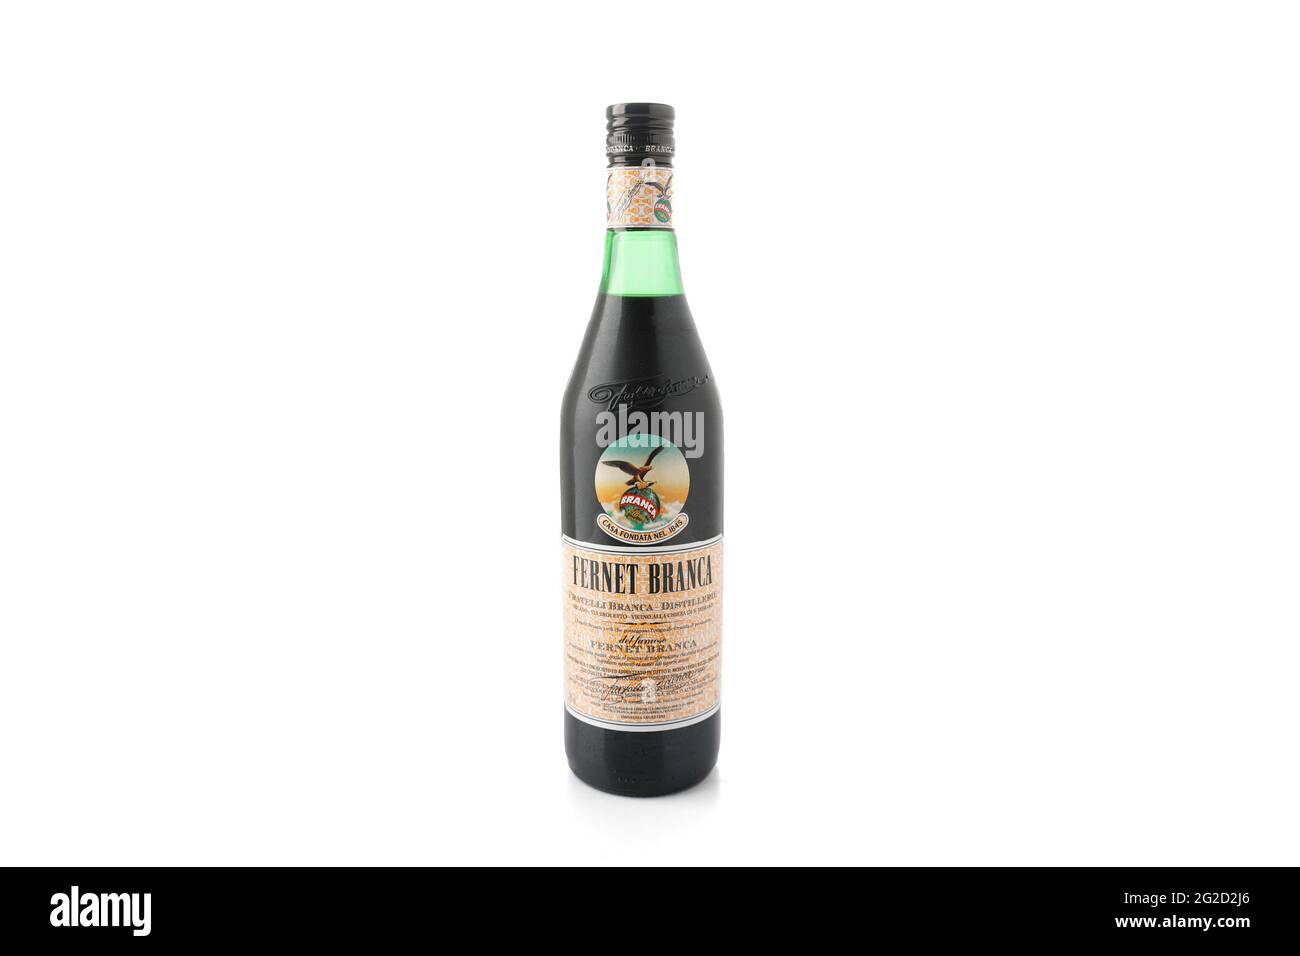 Fernet Branca bottle on white background. Italian aperitif. Alcoholic beverage Stock Photo